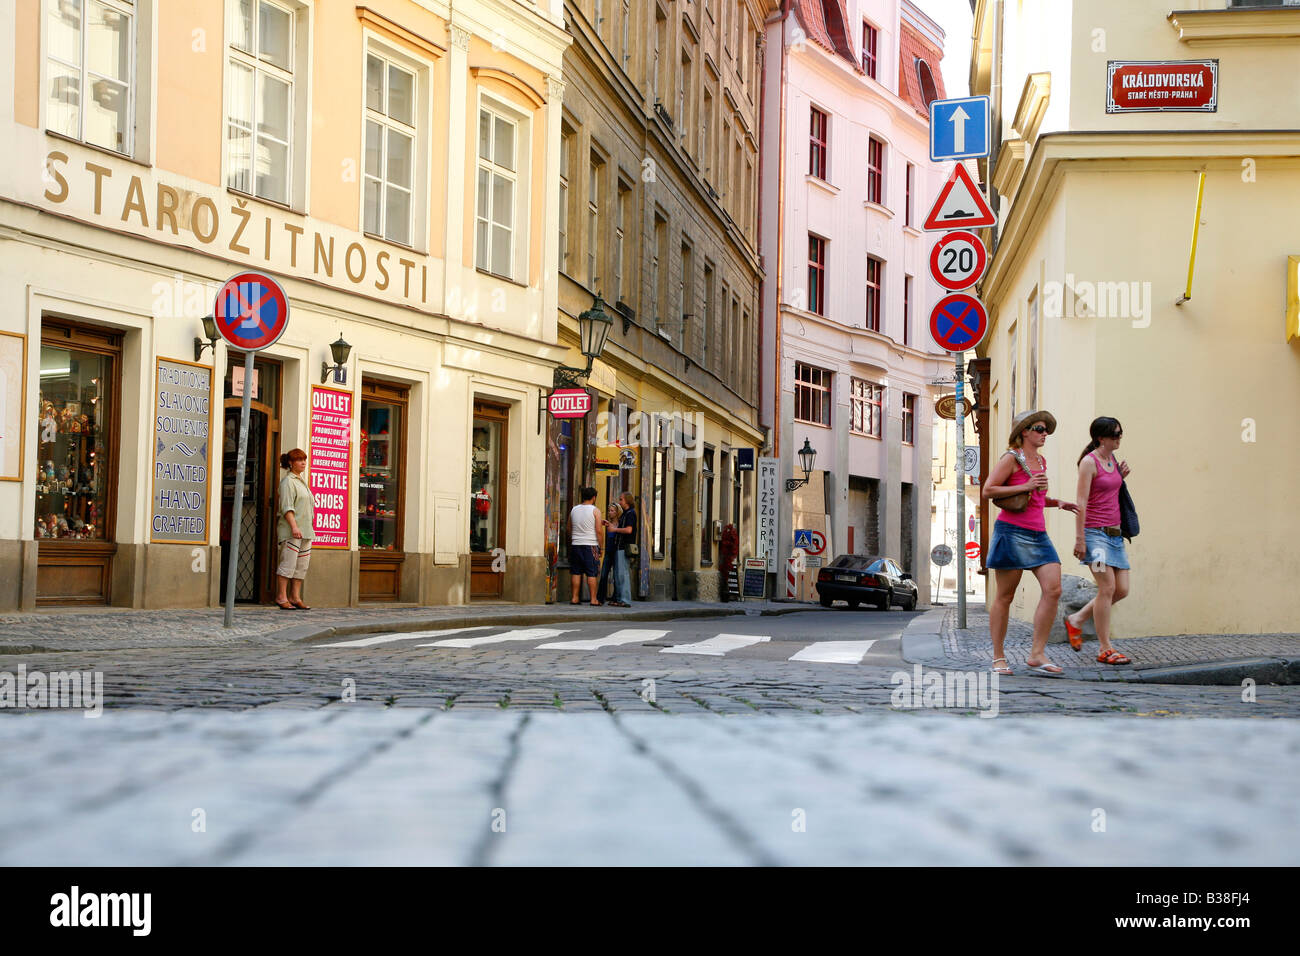 Aug 2008 - Street scene in Stare Mesto Prague Czech Republic Stock Photo